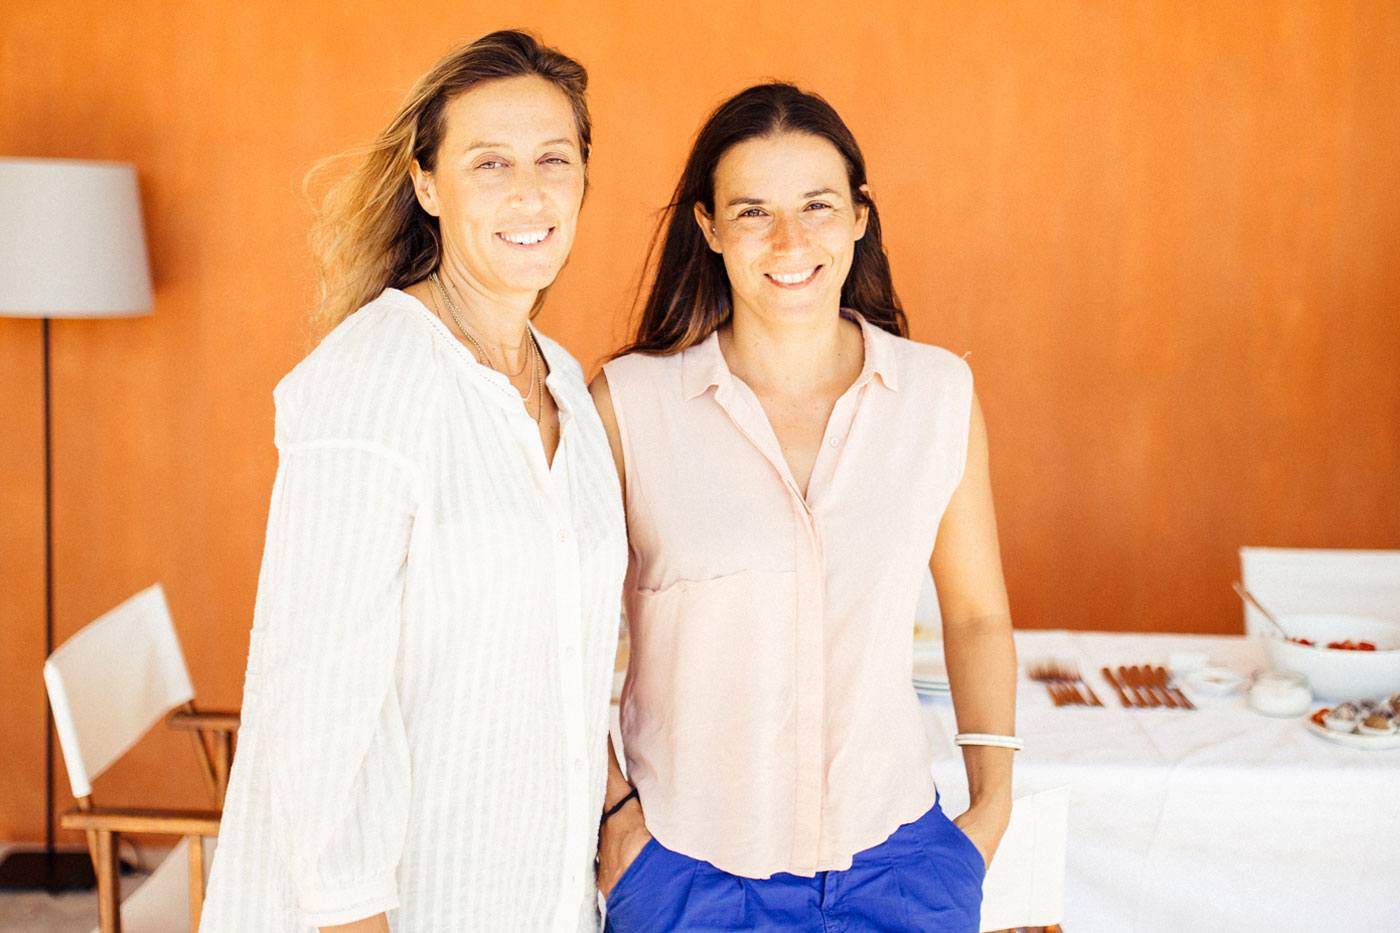 Portugal: Sofia und Mariana von "Taste Algarve"